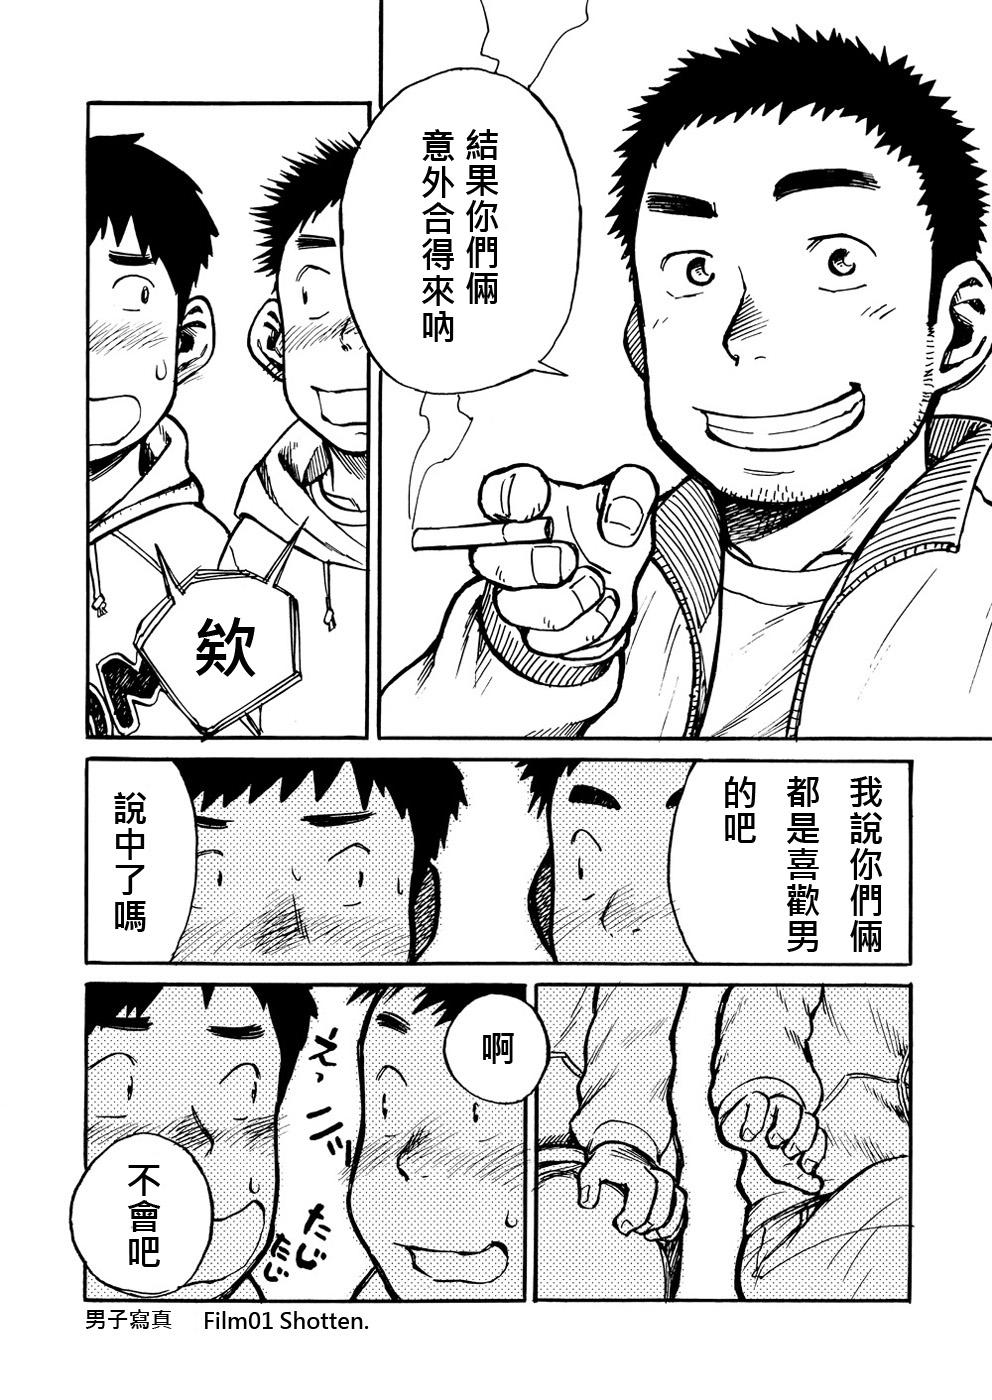 Nalgas Manga Shounen Zoom Vol. 01 | 漫畫少年特寫 Vol. 01 Alt - Page 9